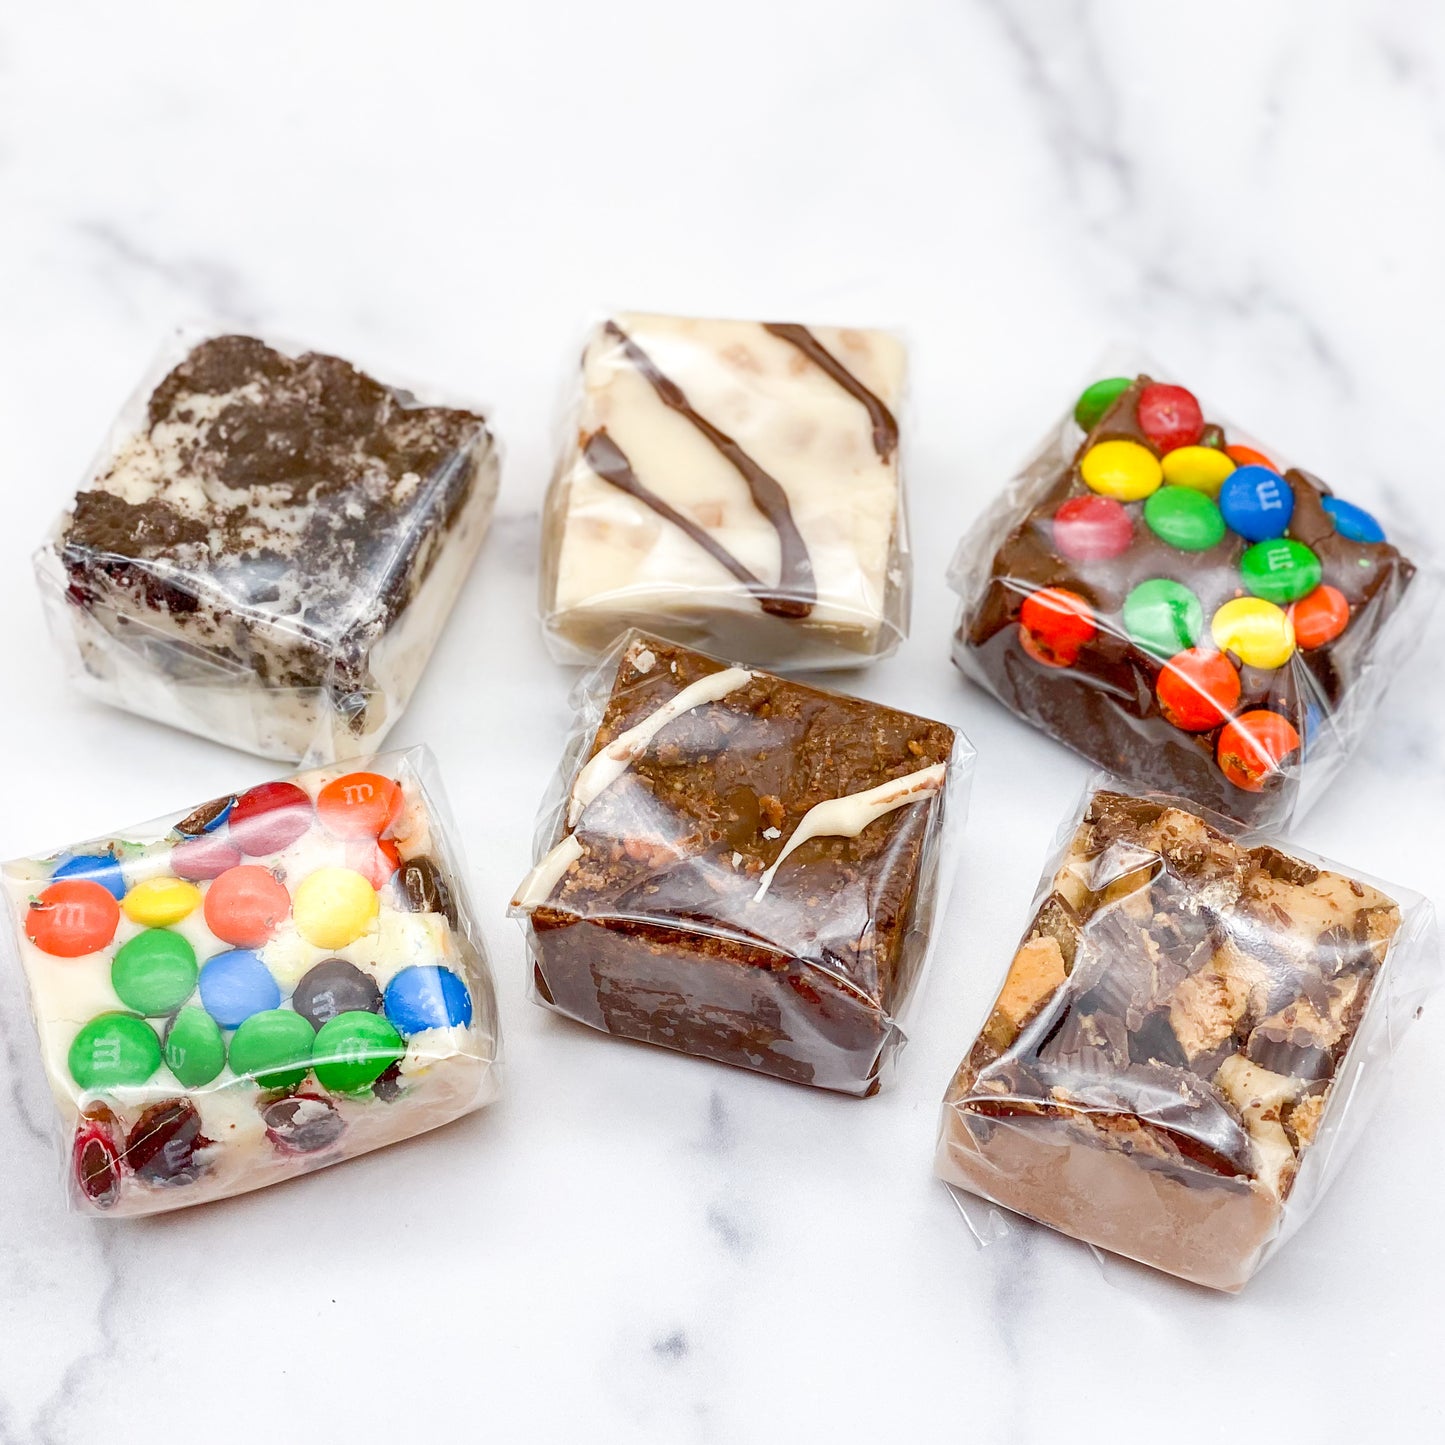 The Candy Bar Connoisseur Fudge Sampler Box